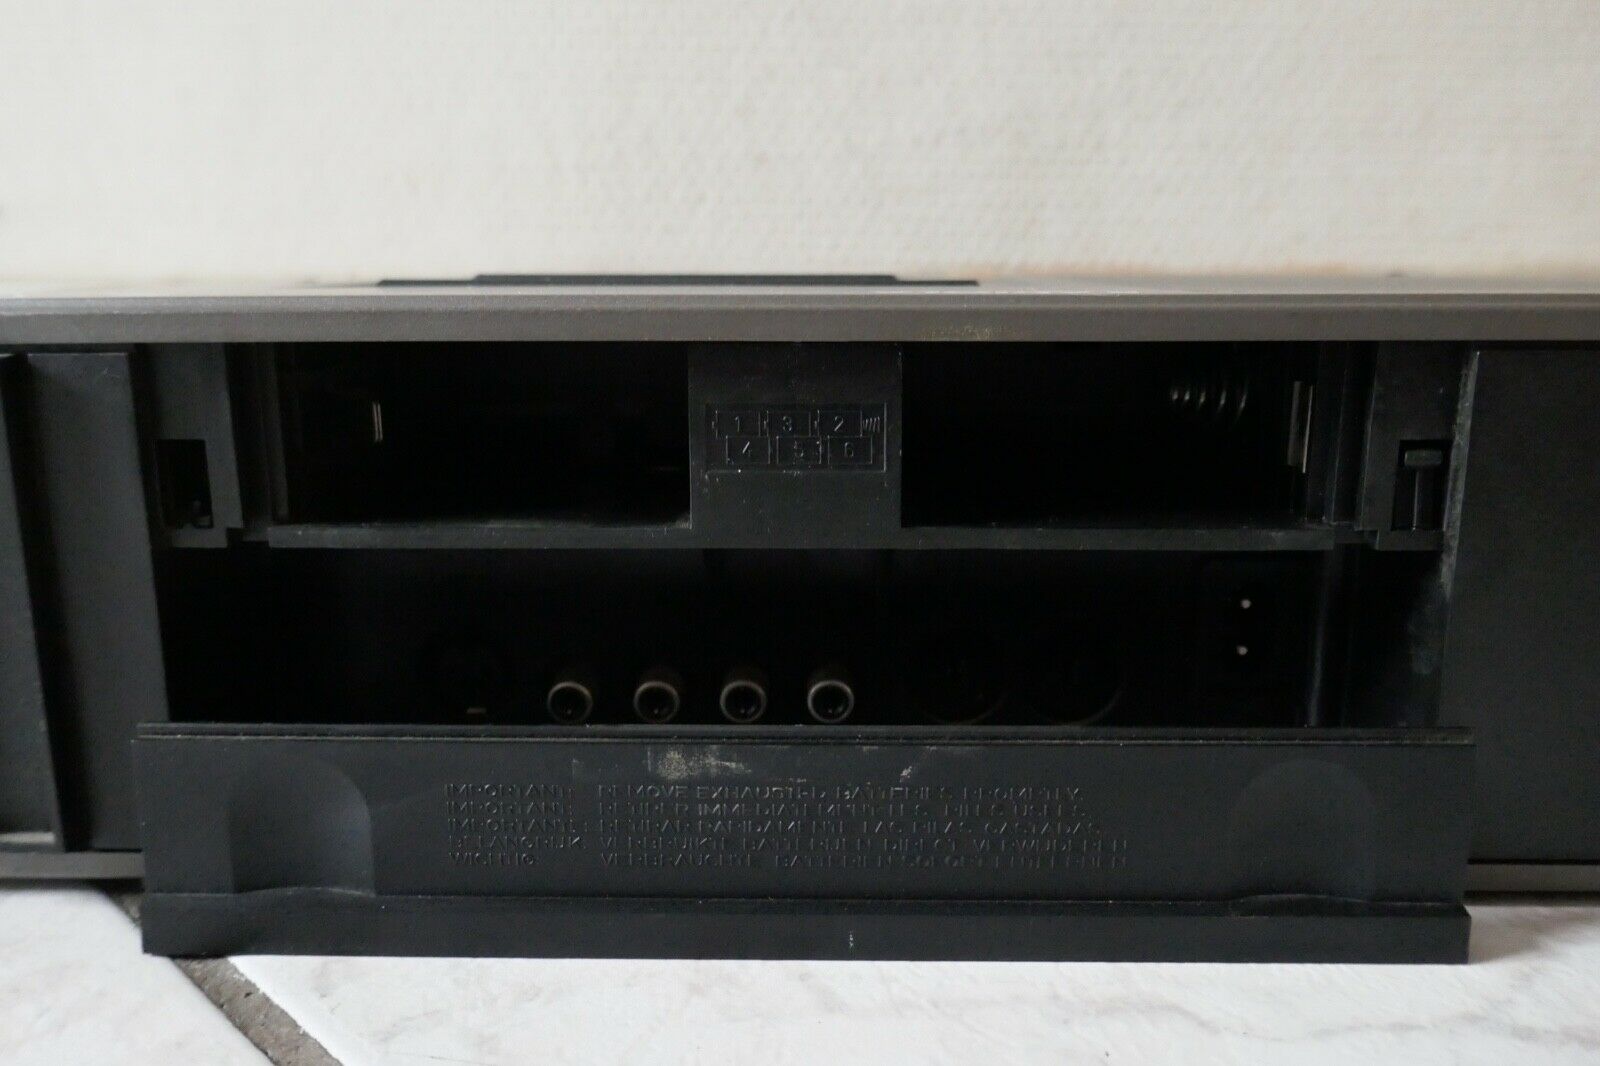 lecteur cassette tape deck radical D 6920 MK2 vintage occasion